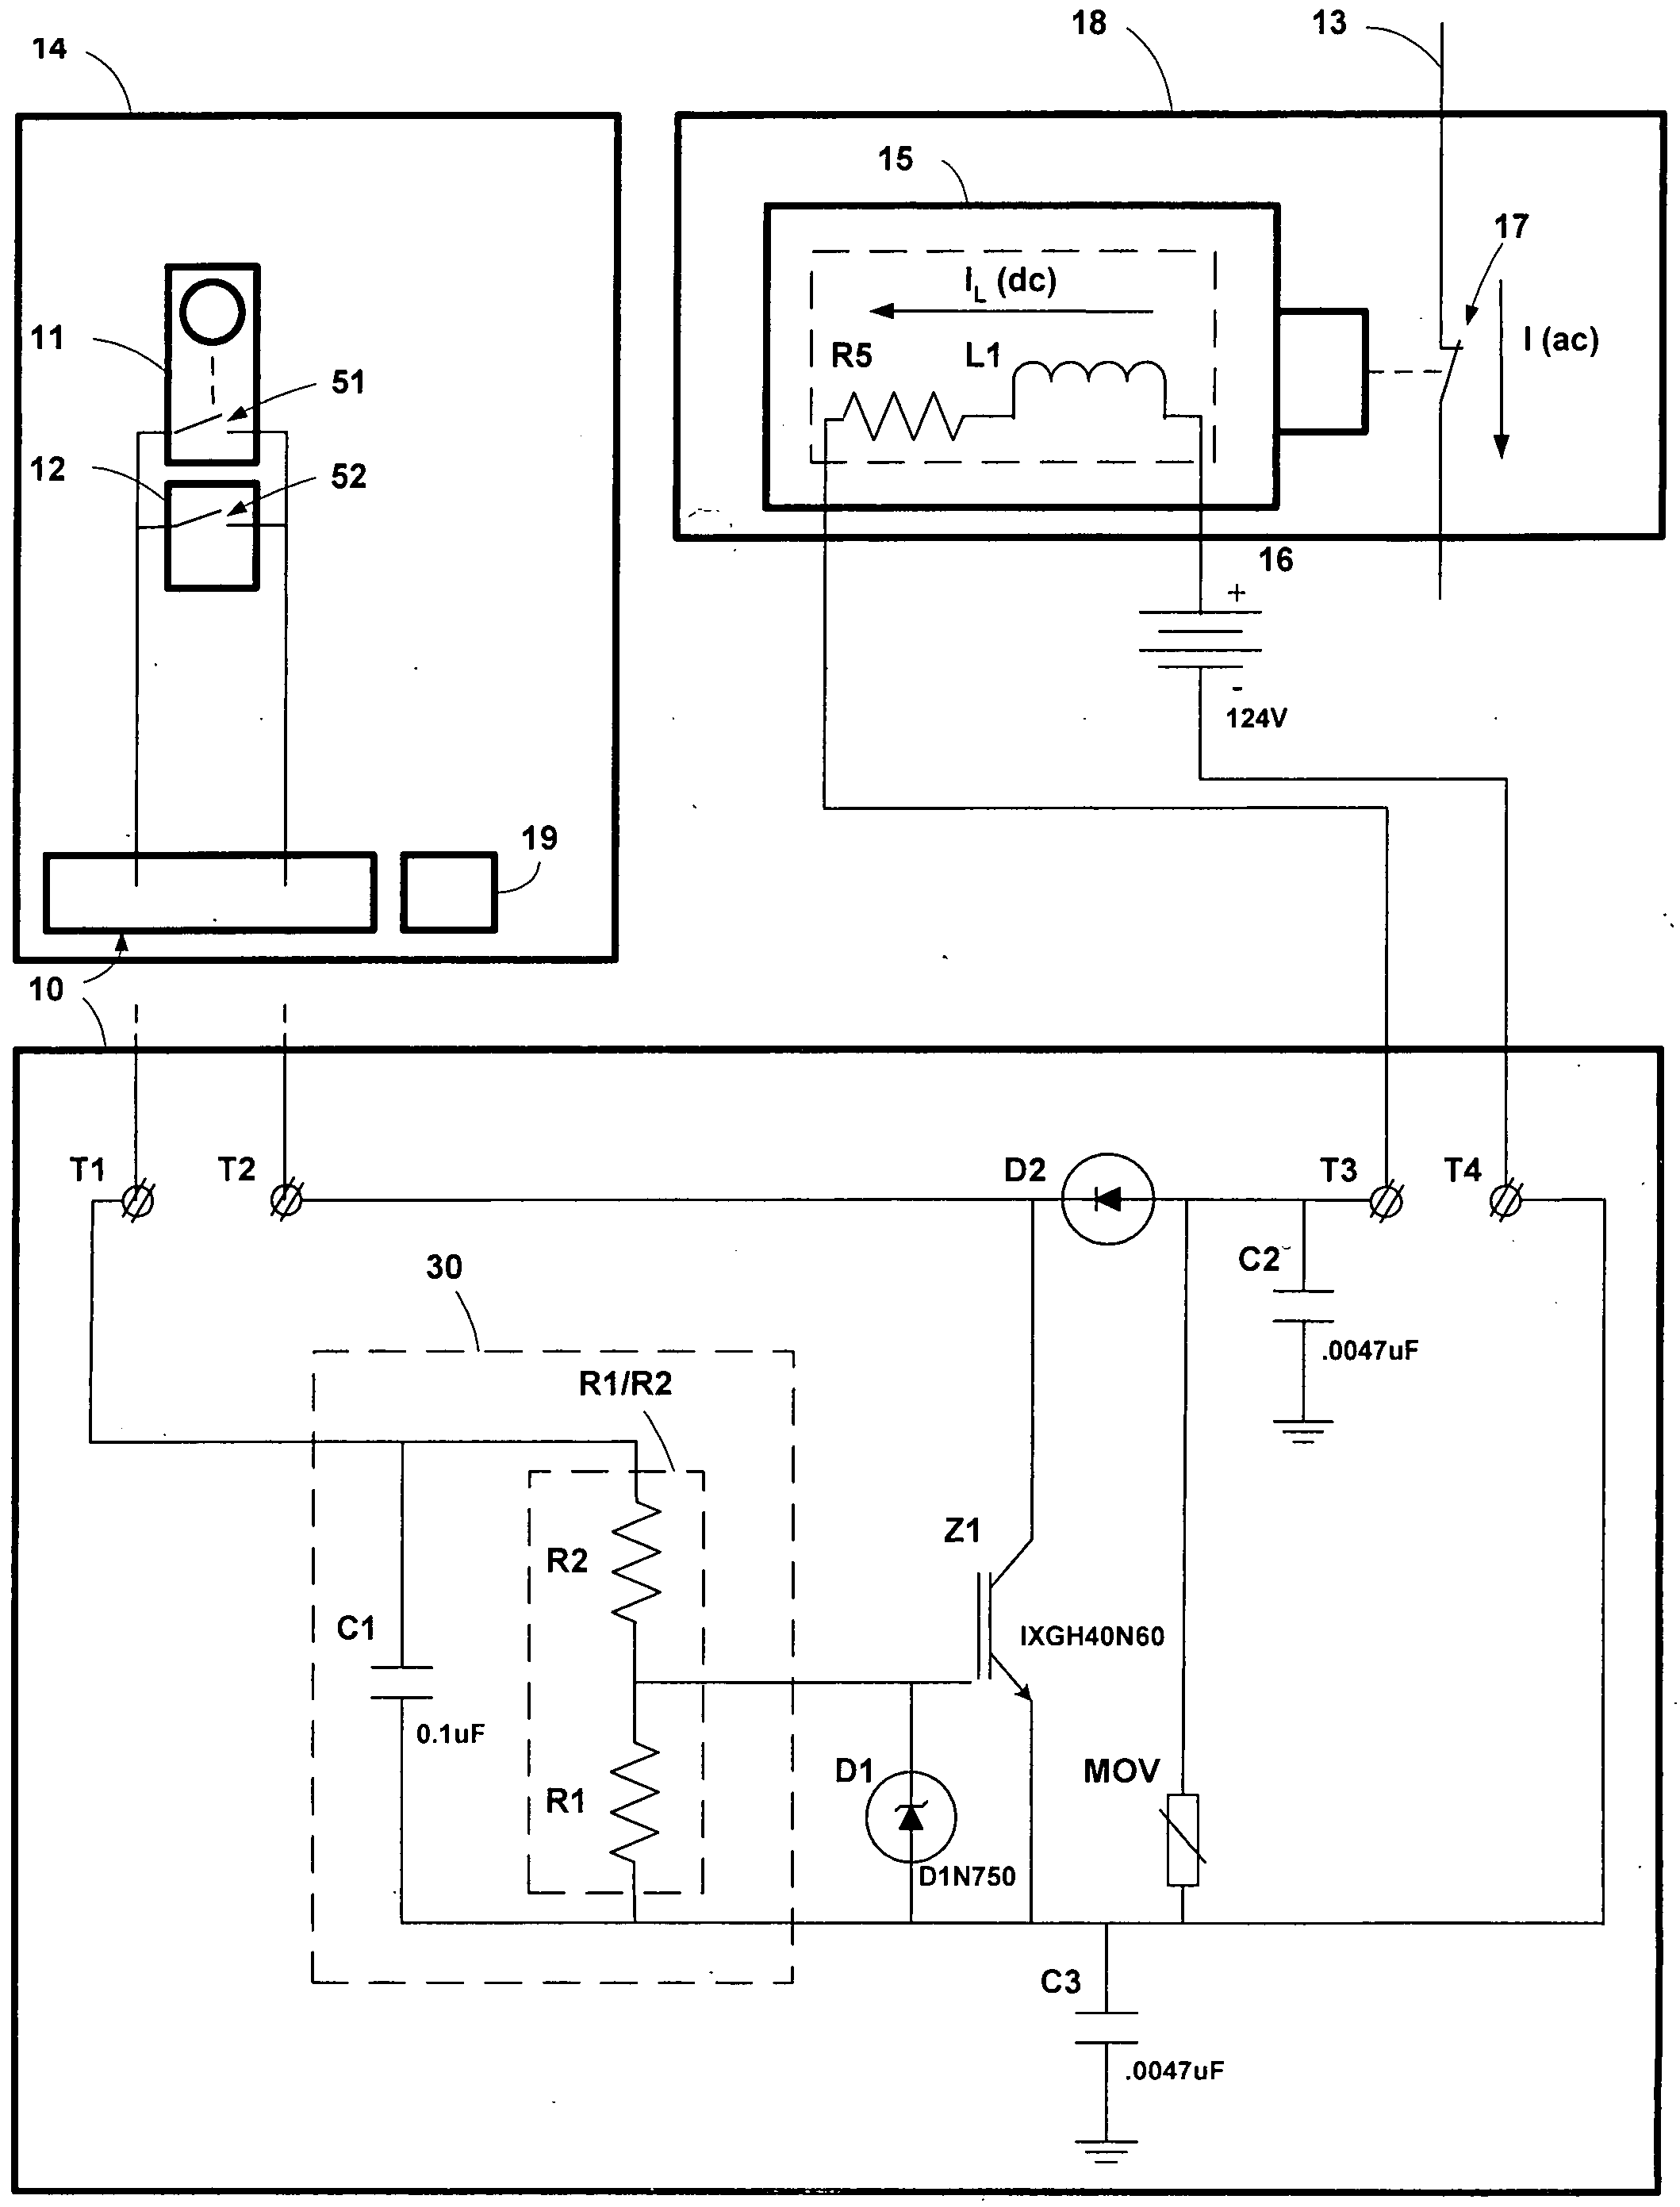 Arc suppression circuit using a semi-conductor switch